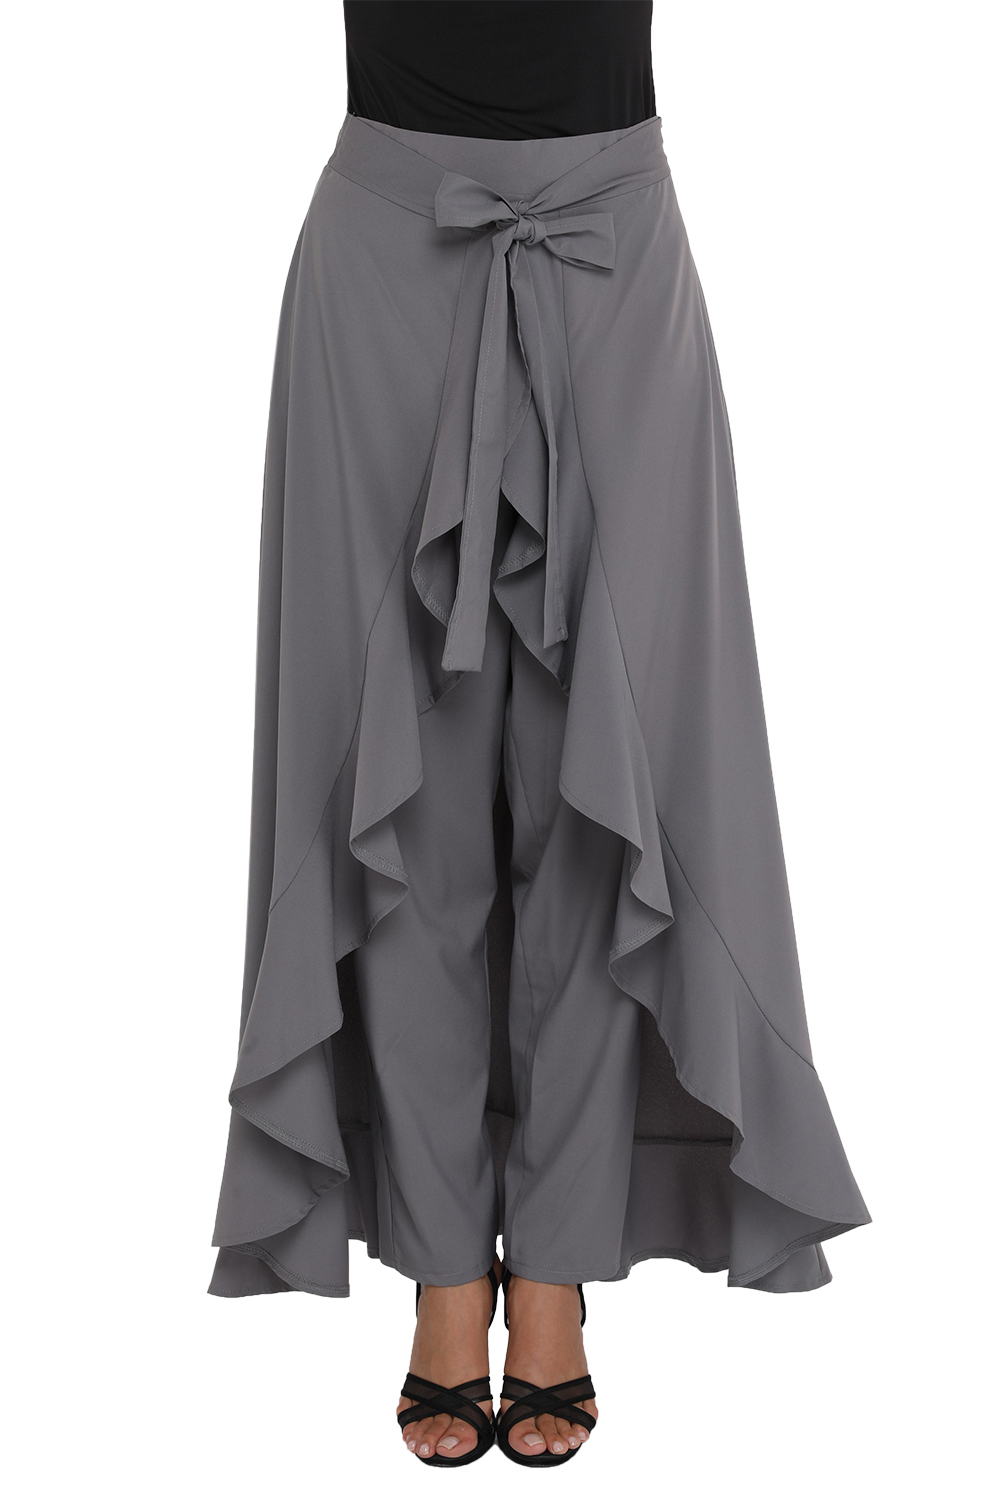 Women Elegant Ruffle Skirt Covered Pant Tie-Waist Maxi Long Palazzo Pant Skirts LC-77034 